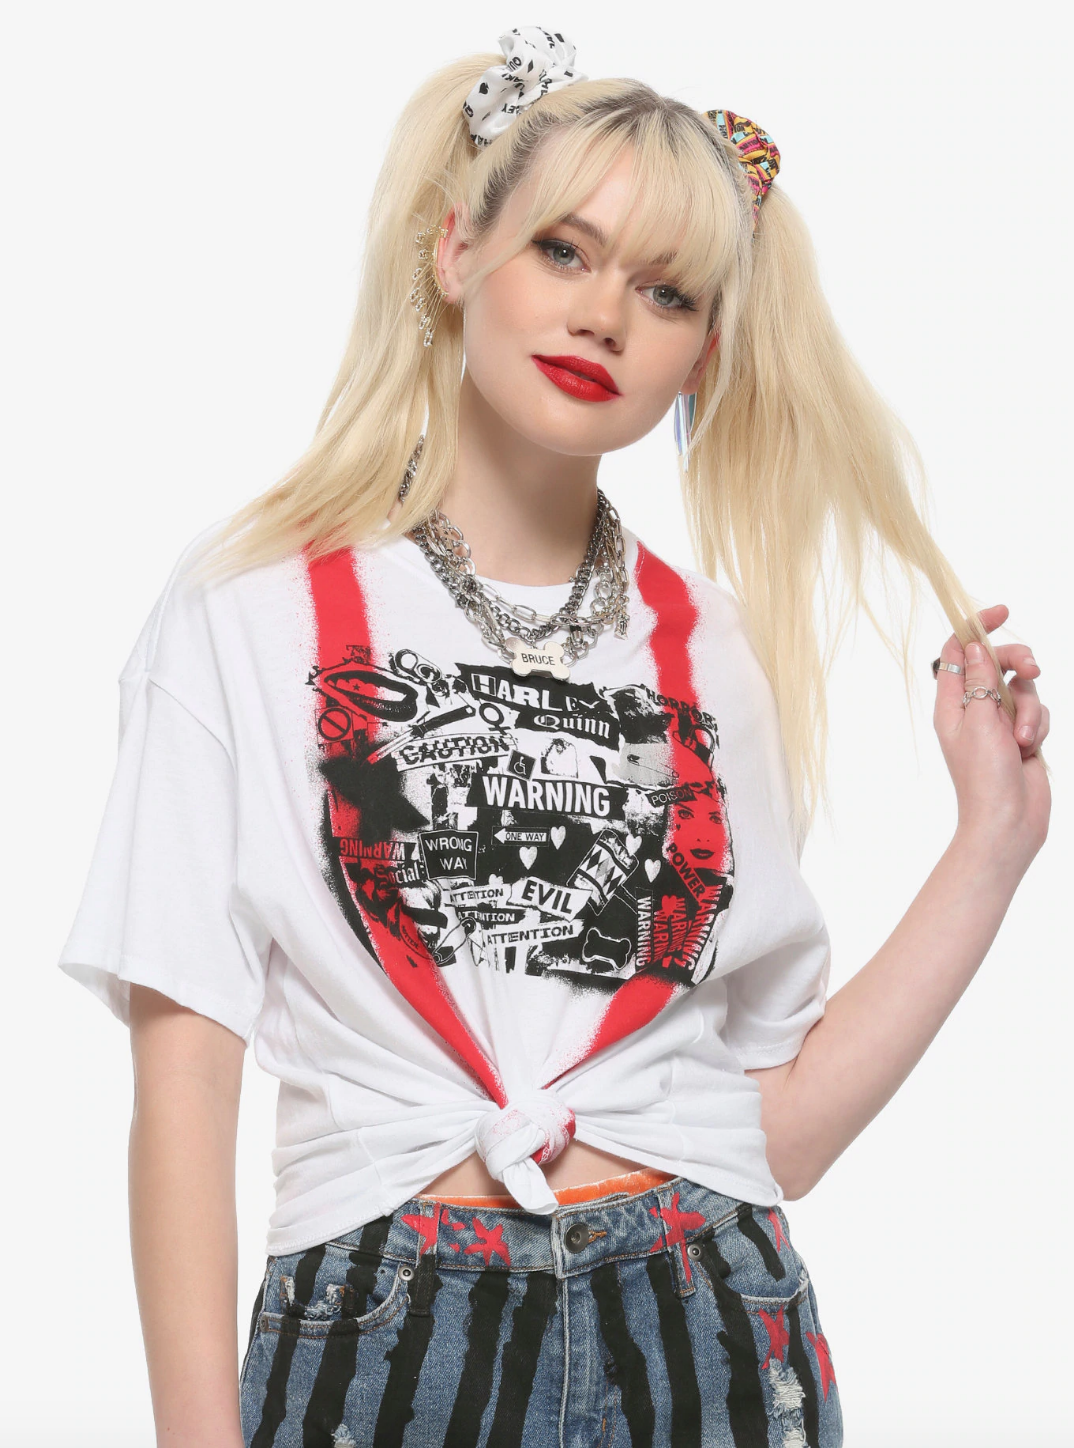 Harley Quinn Art Cosplay T-Shirt